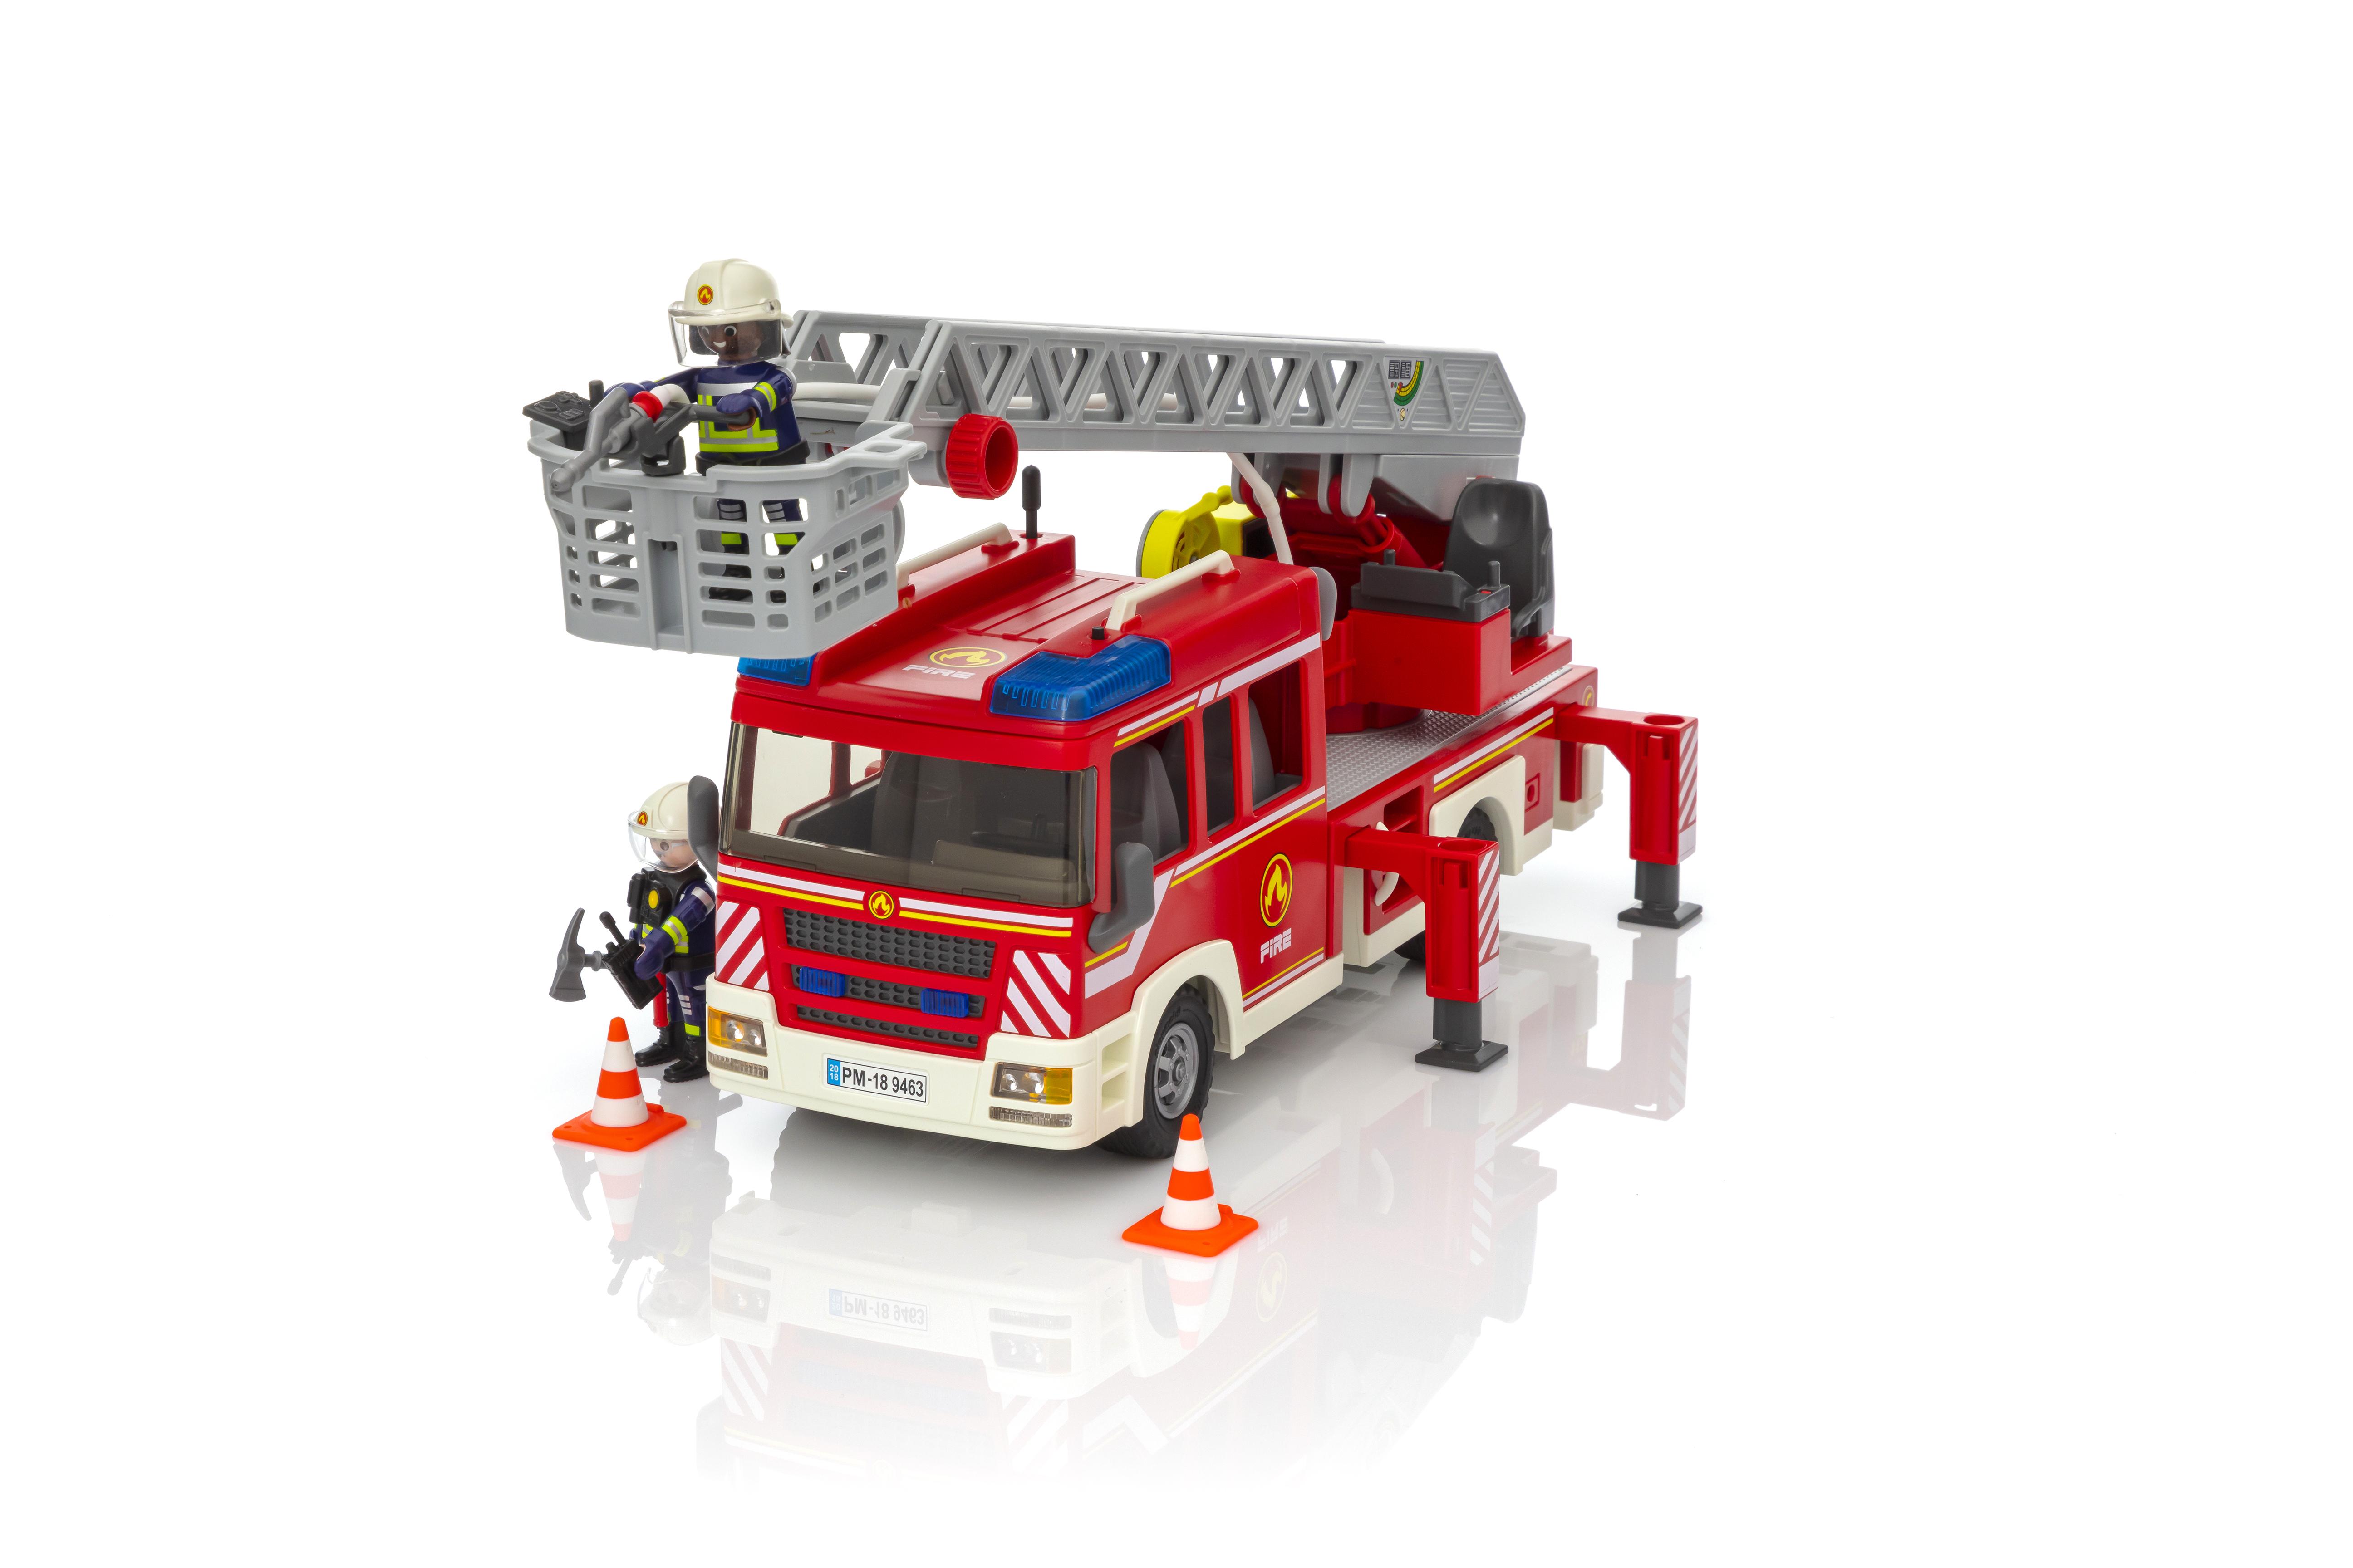 playmobil pompier 9463